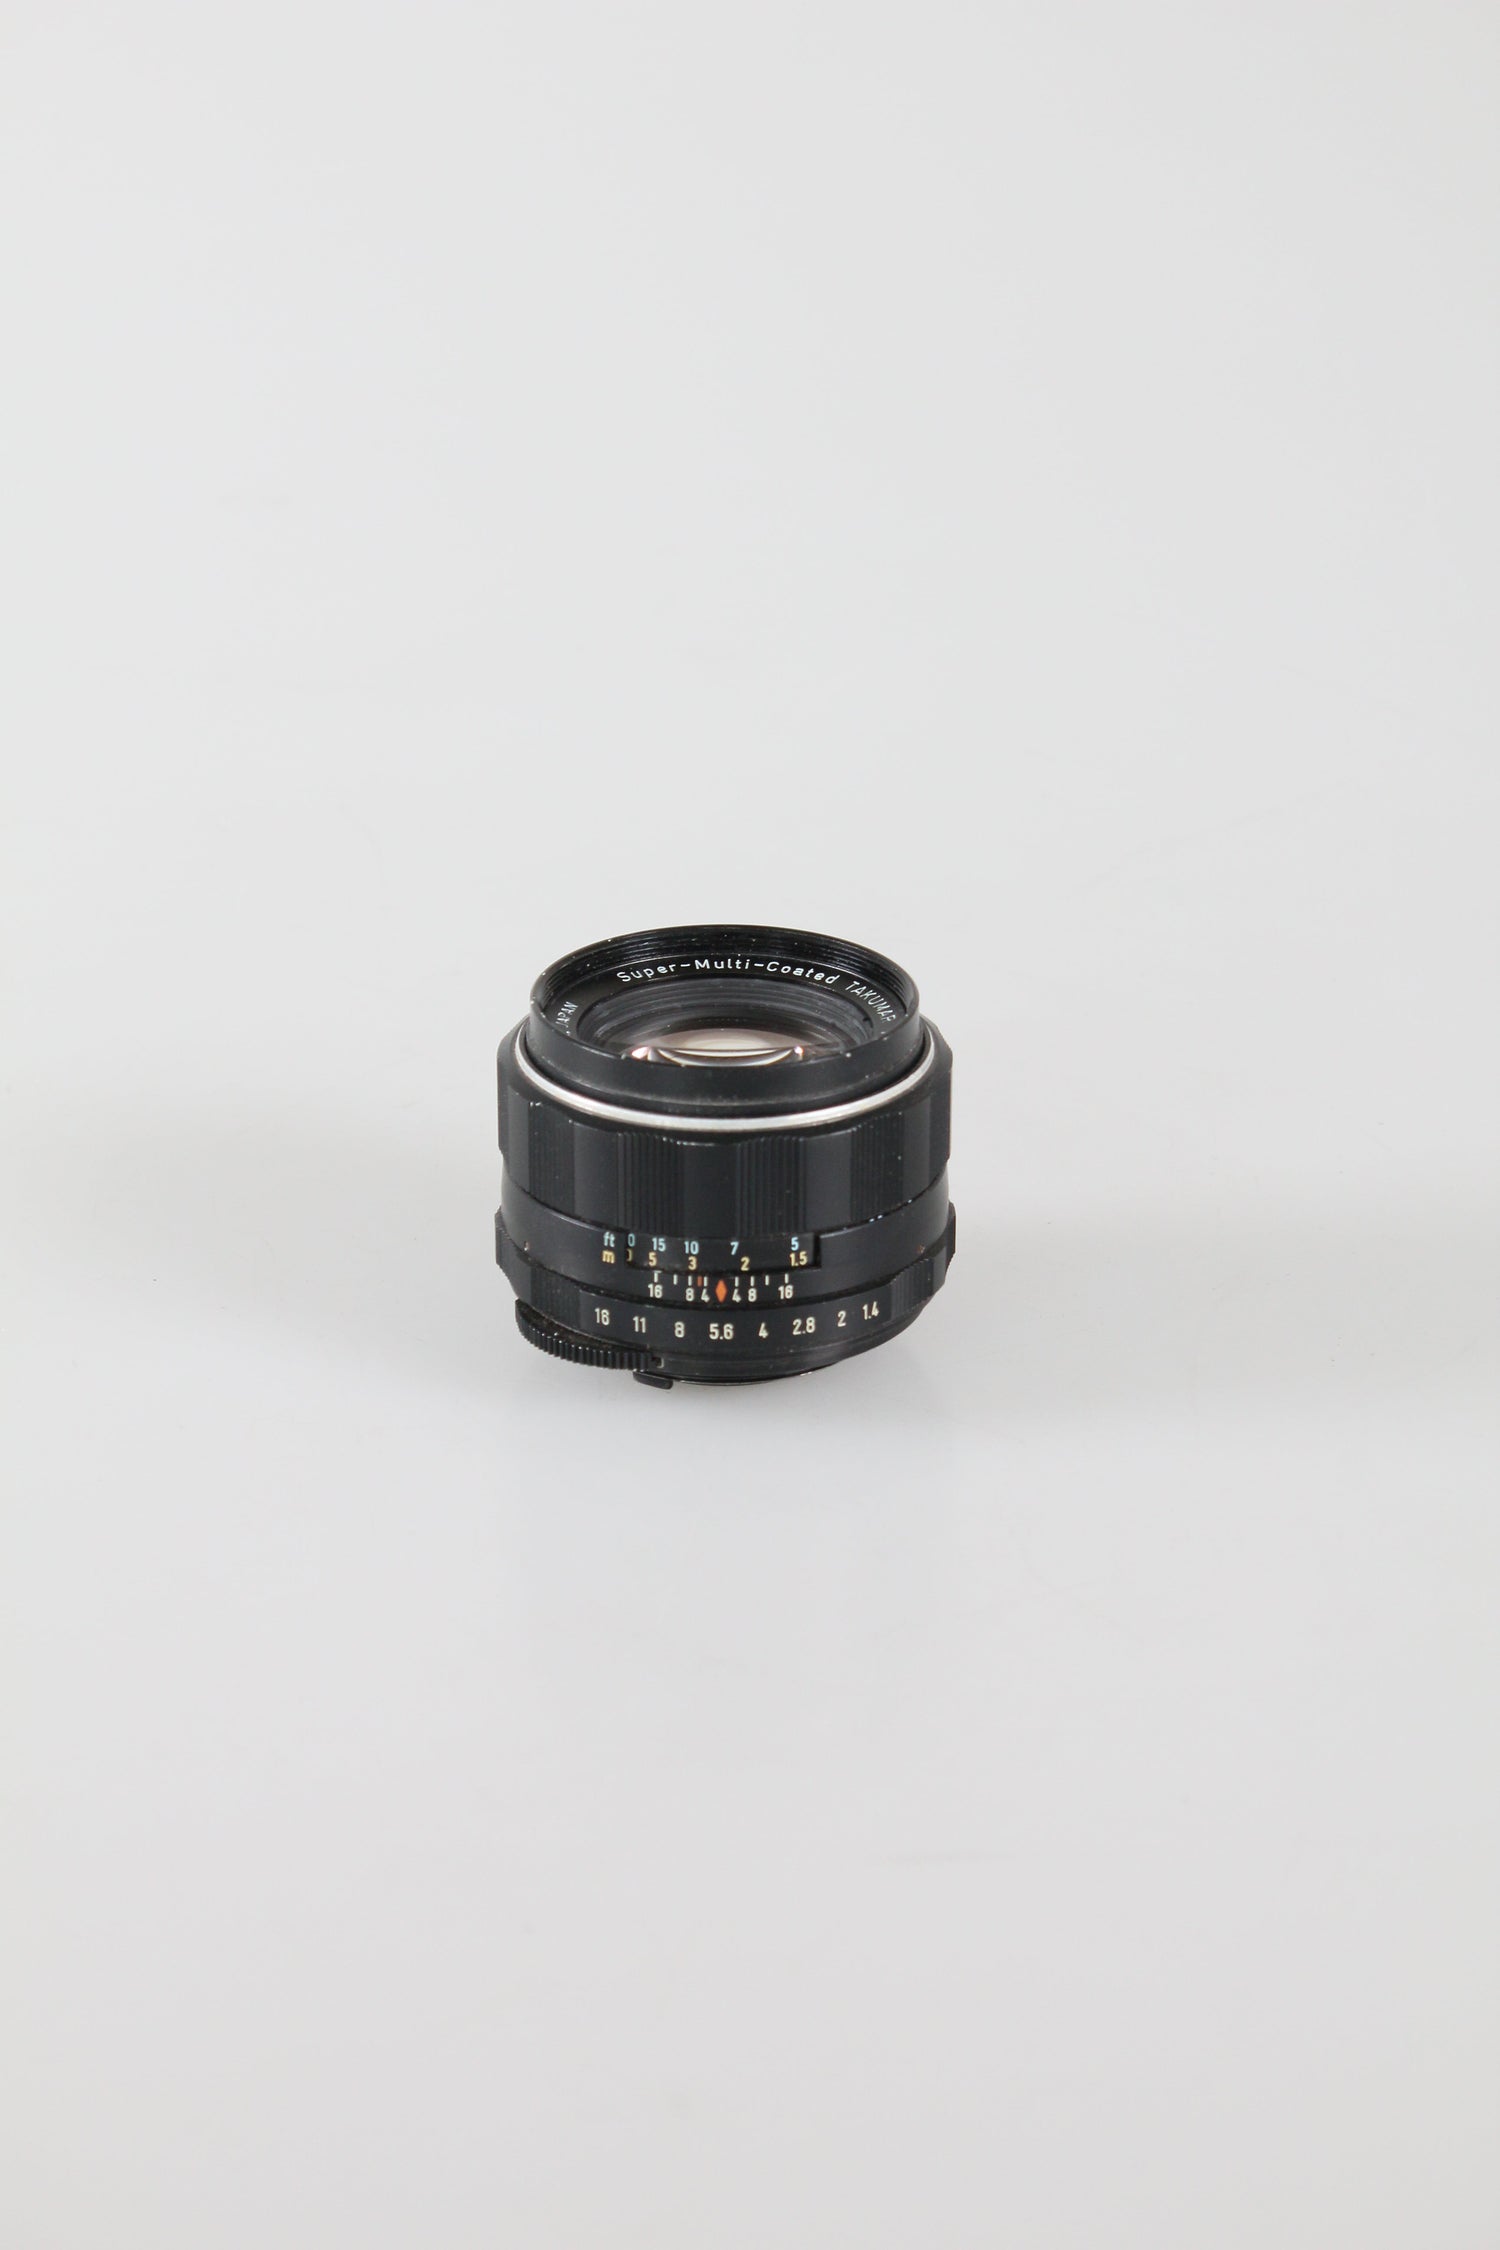 35mm Film Camera Lenses